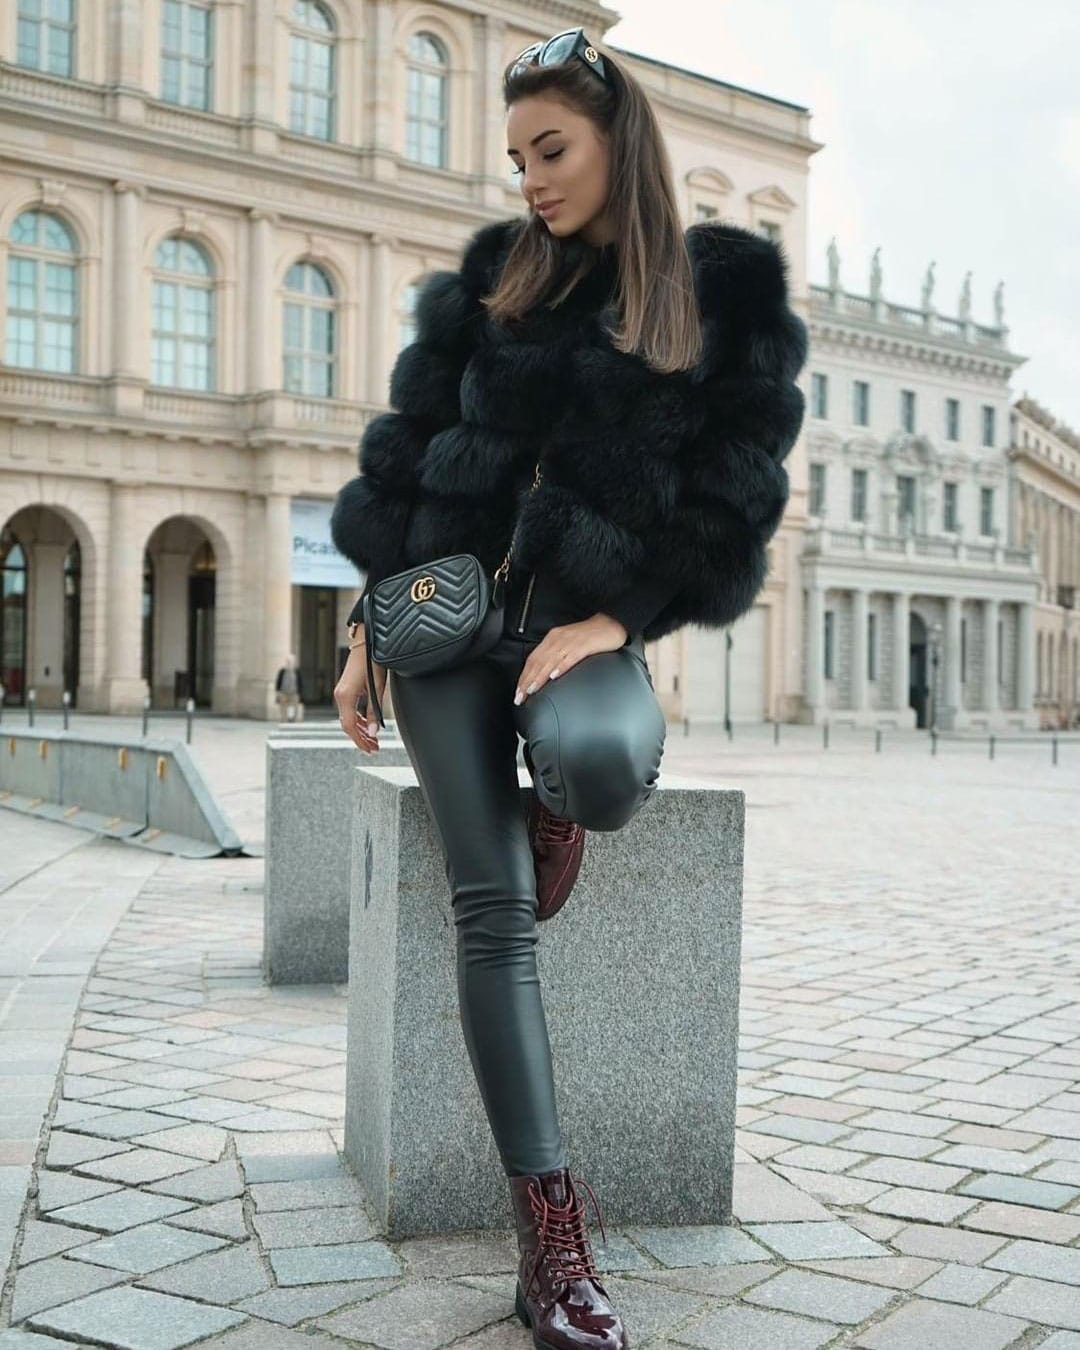 discount 78% Beige L Made in Italy vest WOMEN FASHION Jackets Fur 